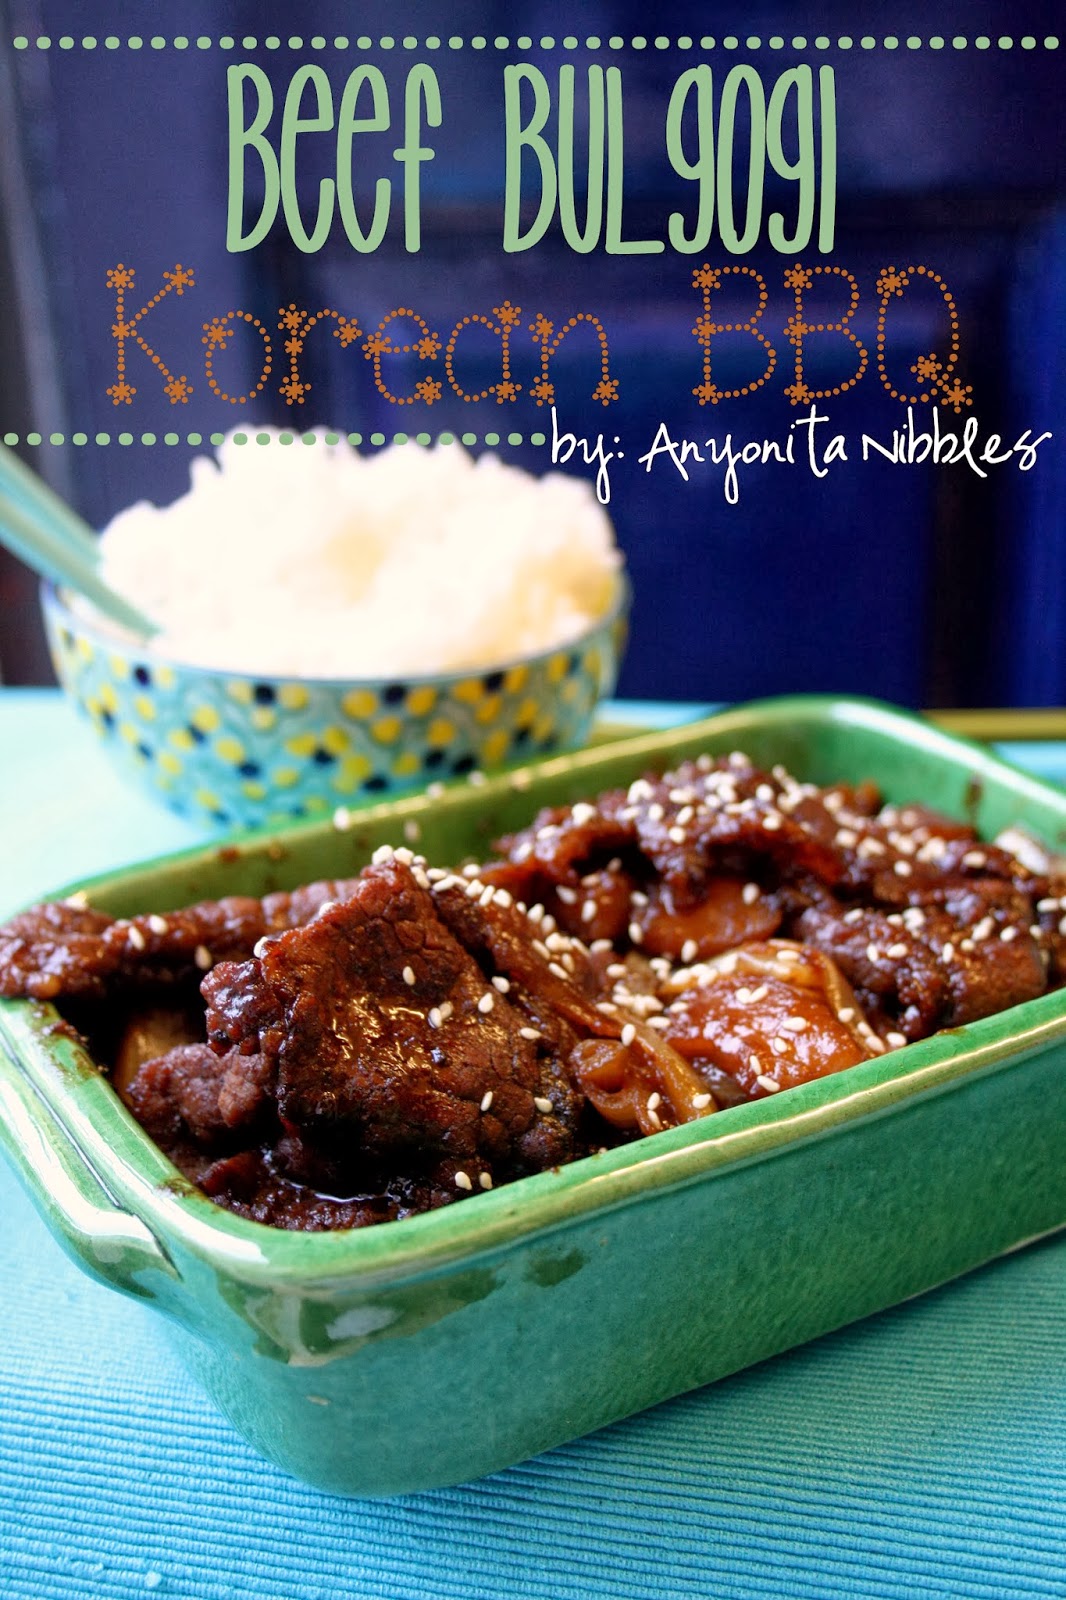 http://www.anyonita-nibbles.co.uk/2014/02/beef-bulgogi-rice-korean-bbq.html